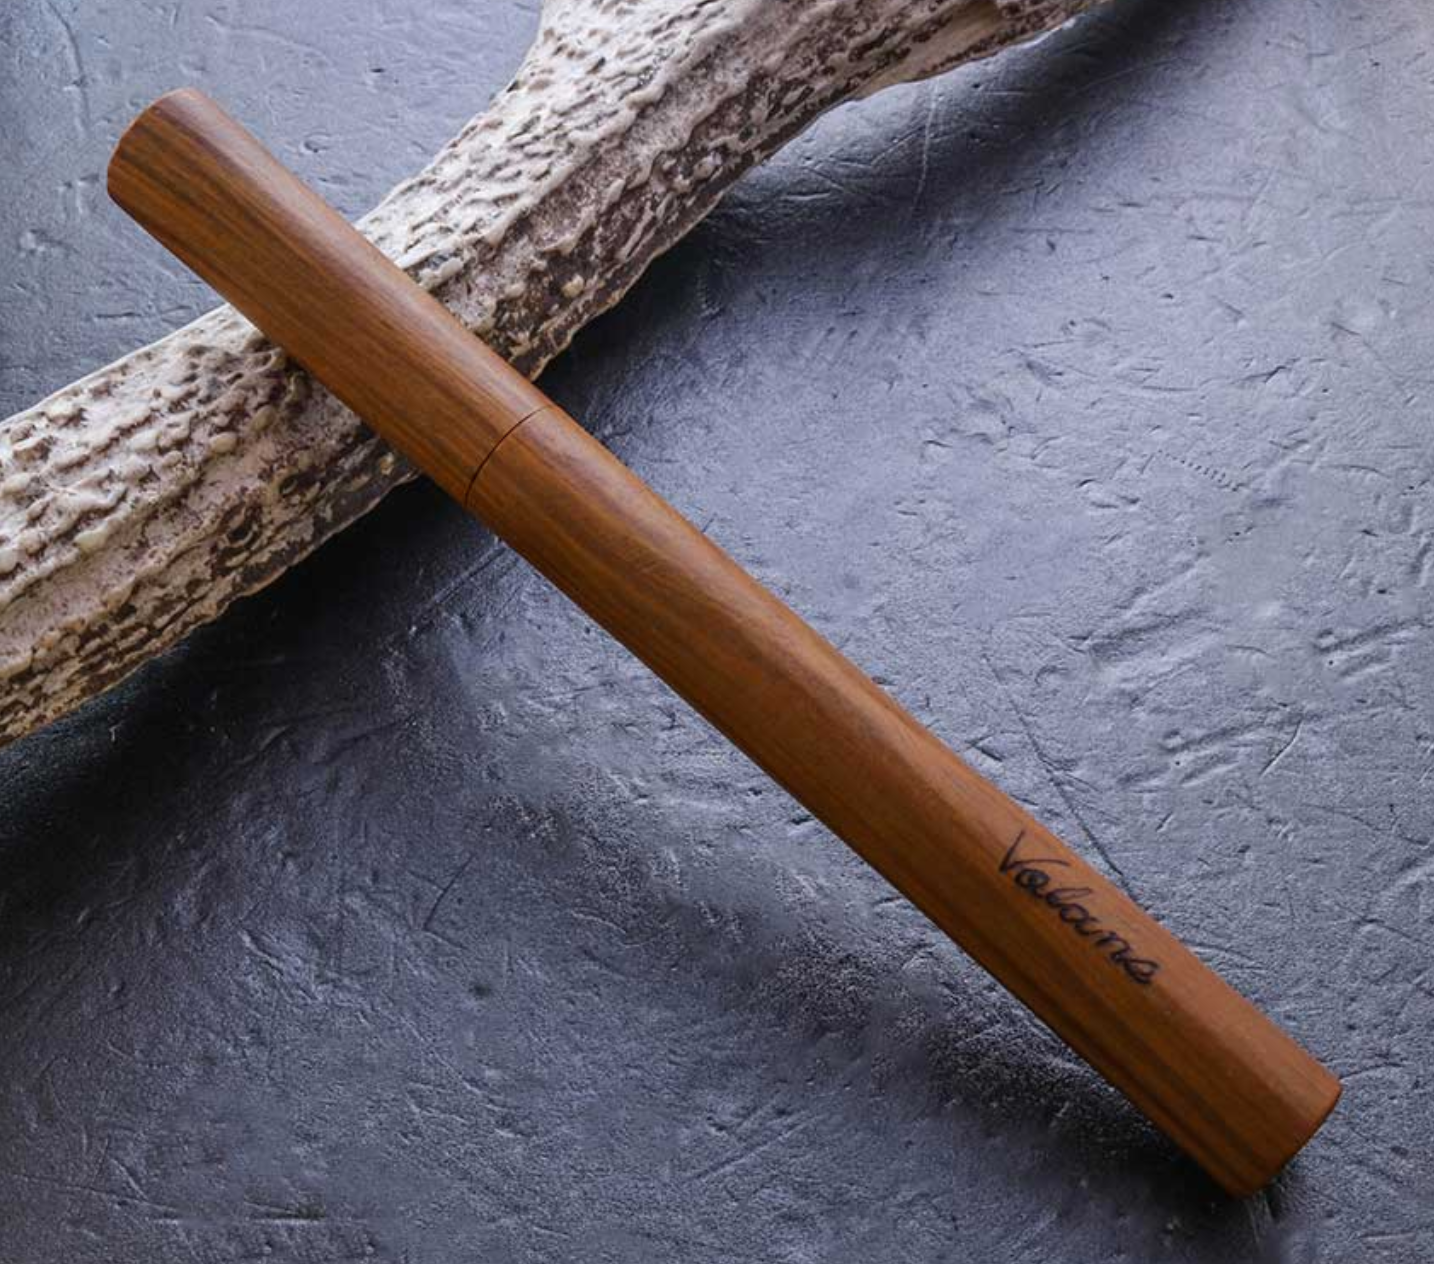  Bút Máy Wancher Unique Wood - Marukata - Cedarwood - Bút Gỗ Tự Nhiên 